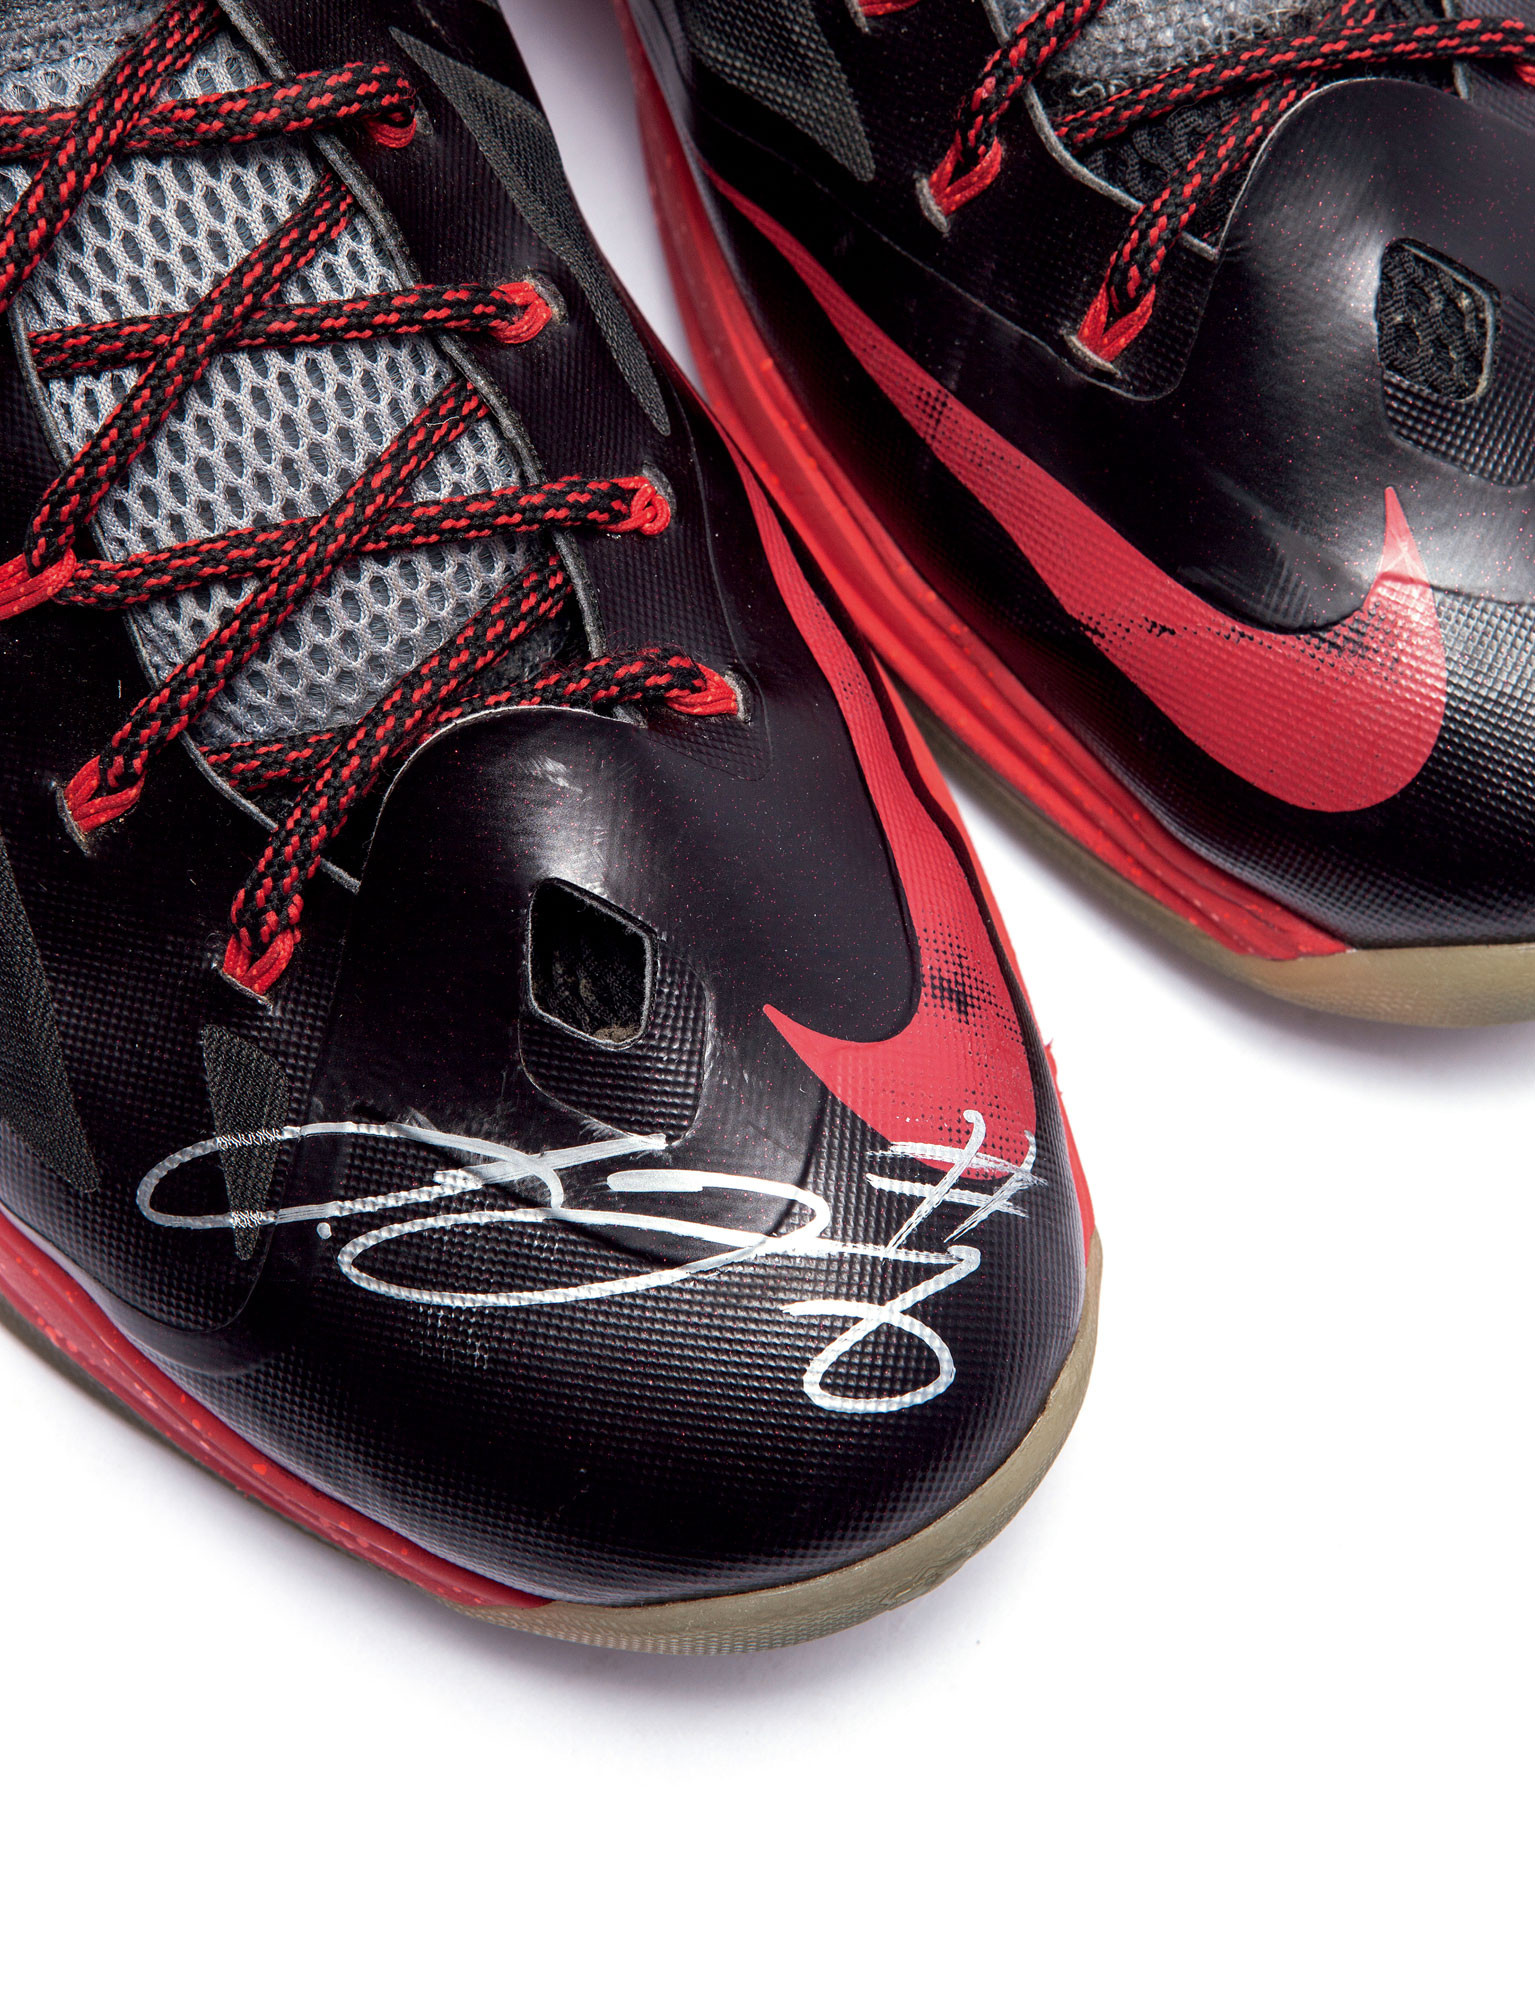 Nike LEBRON X“Miami Heat” PE with autograph